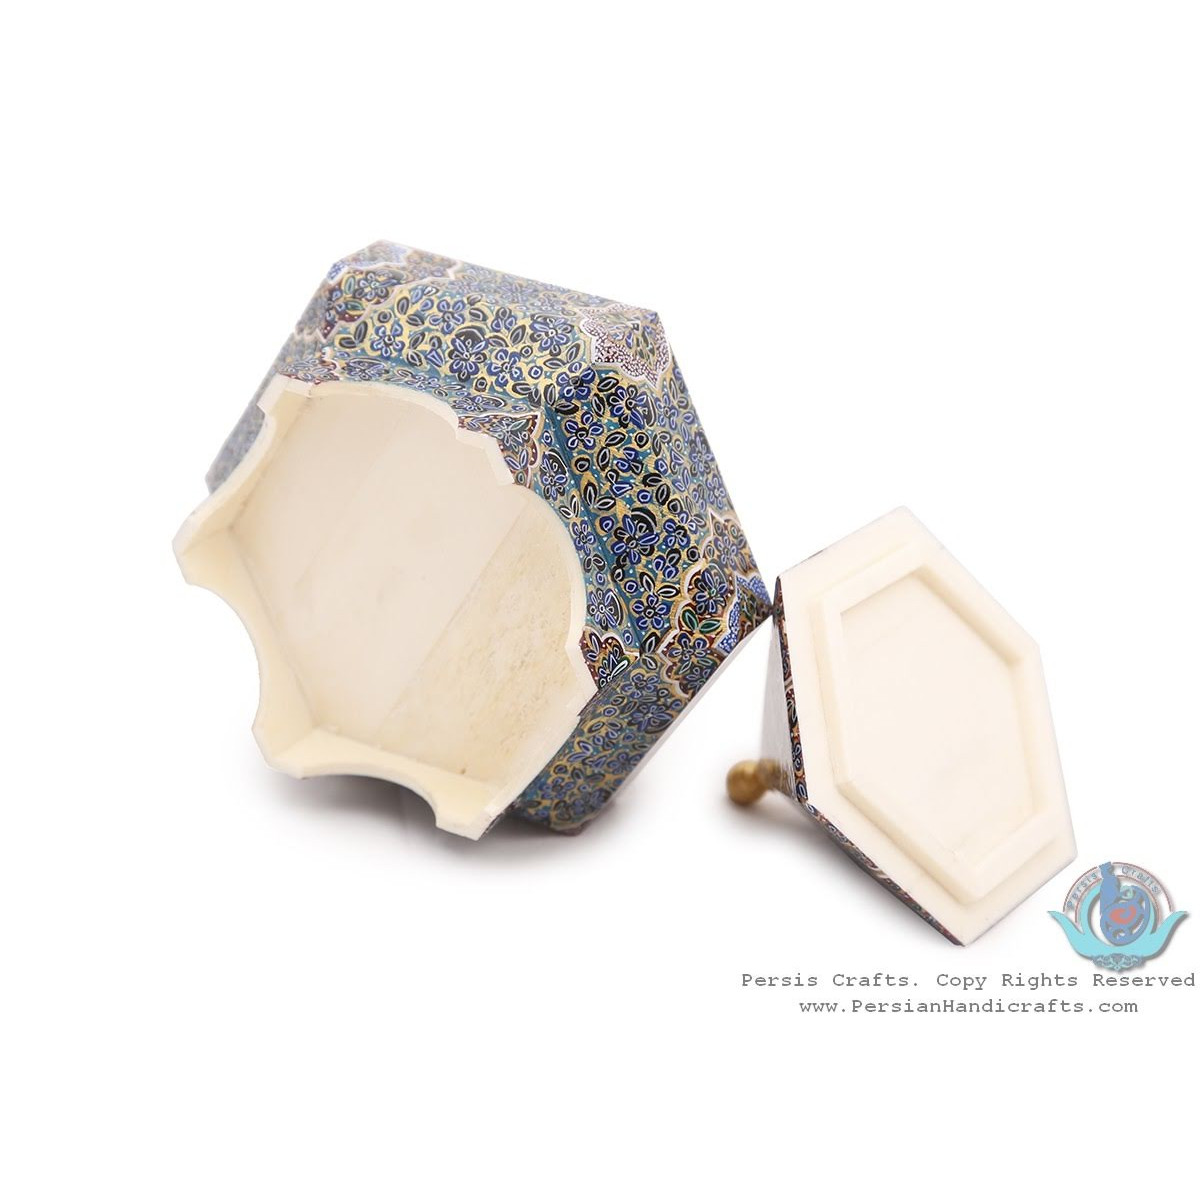 Miniatur Tazhib Design Dome Shape Jewelry Box	- HM3904-Persian Handicrafts